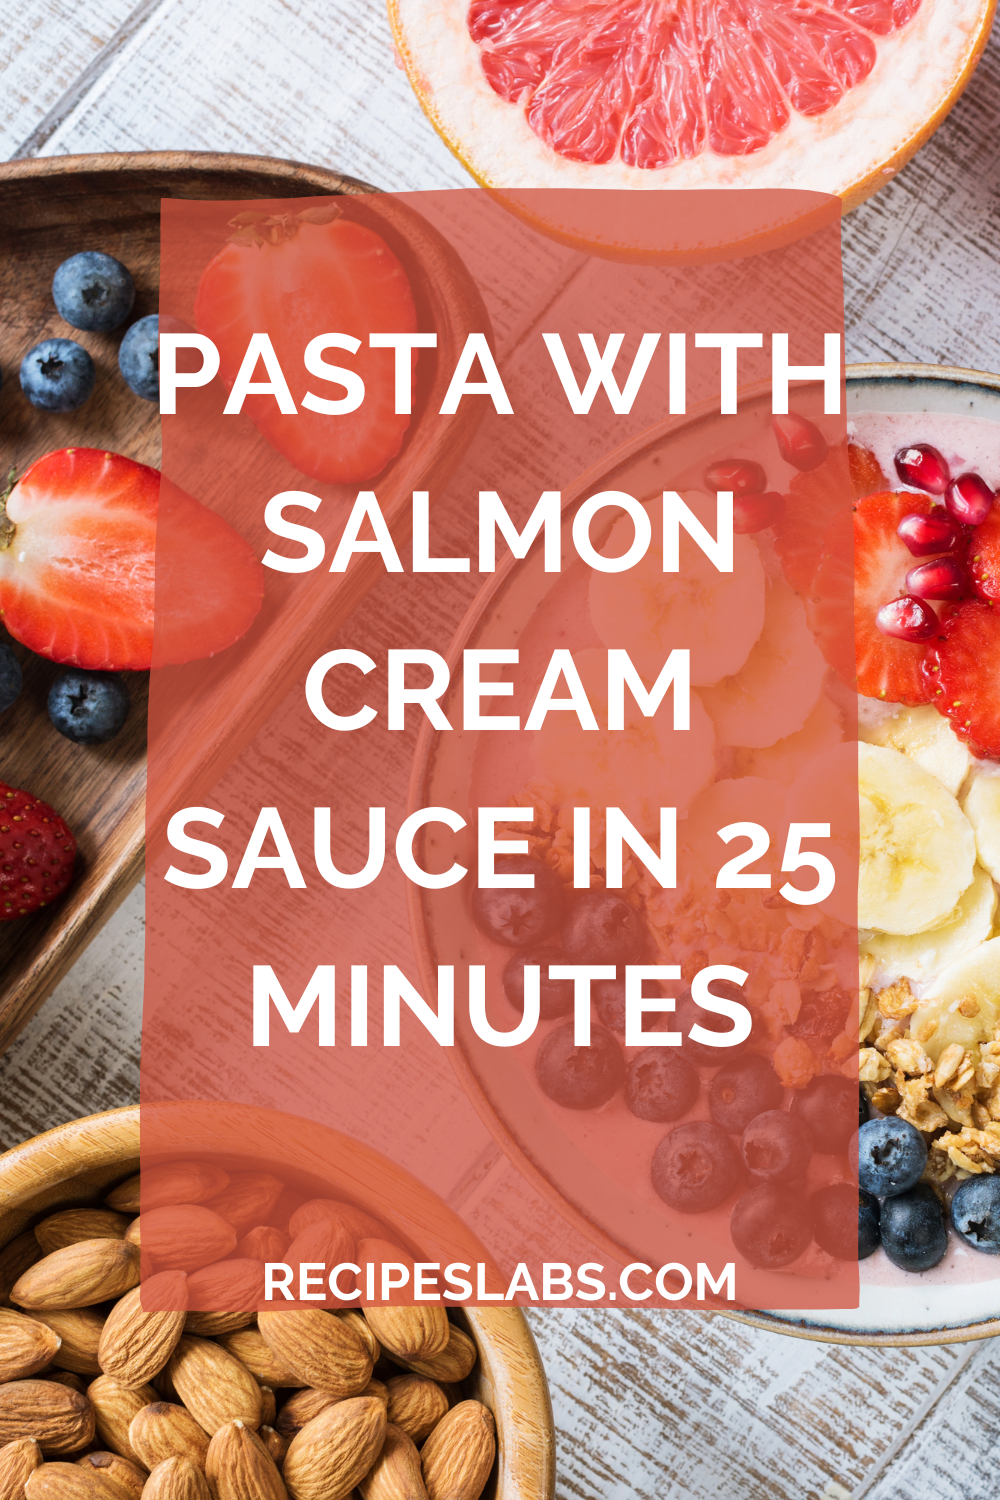 Pasta With Salmon Cream Sauce In 25 Minutes